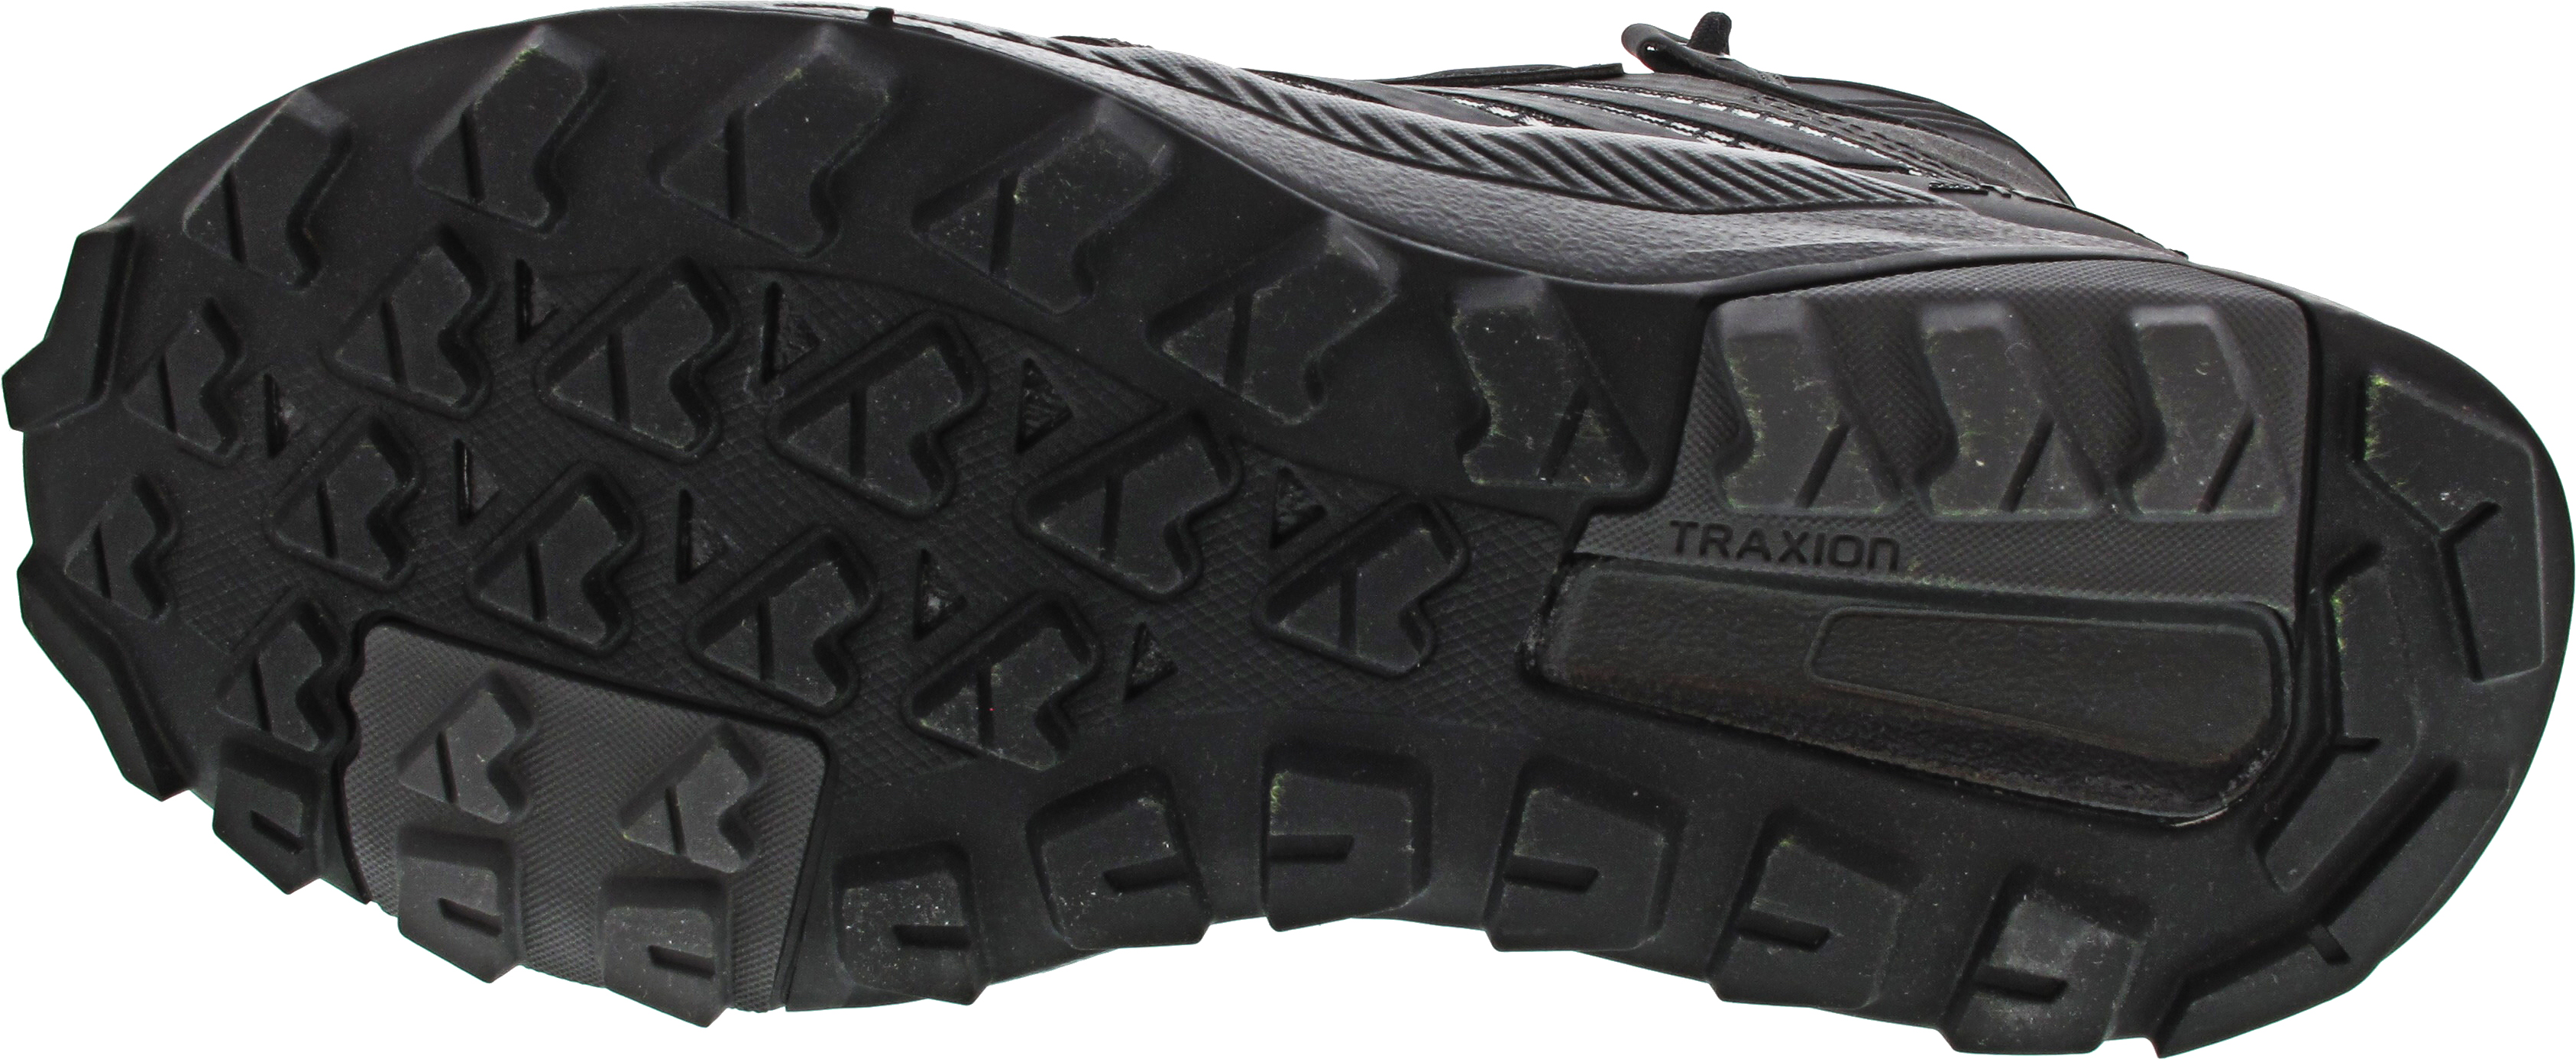 adidas Terrex Trailmaker Mid